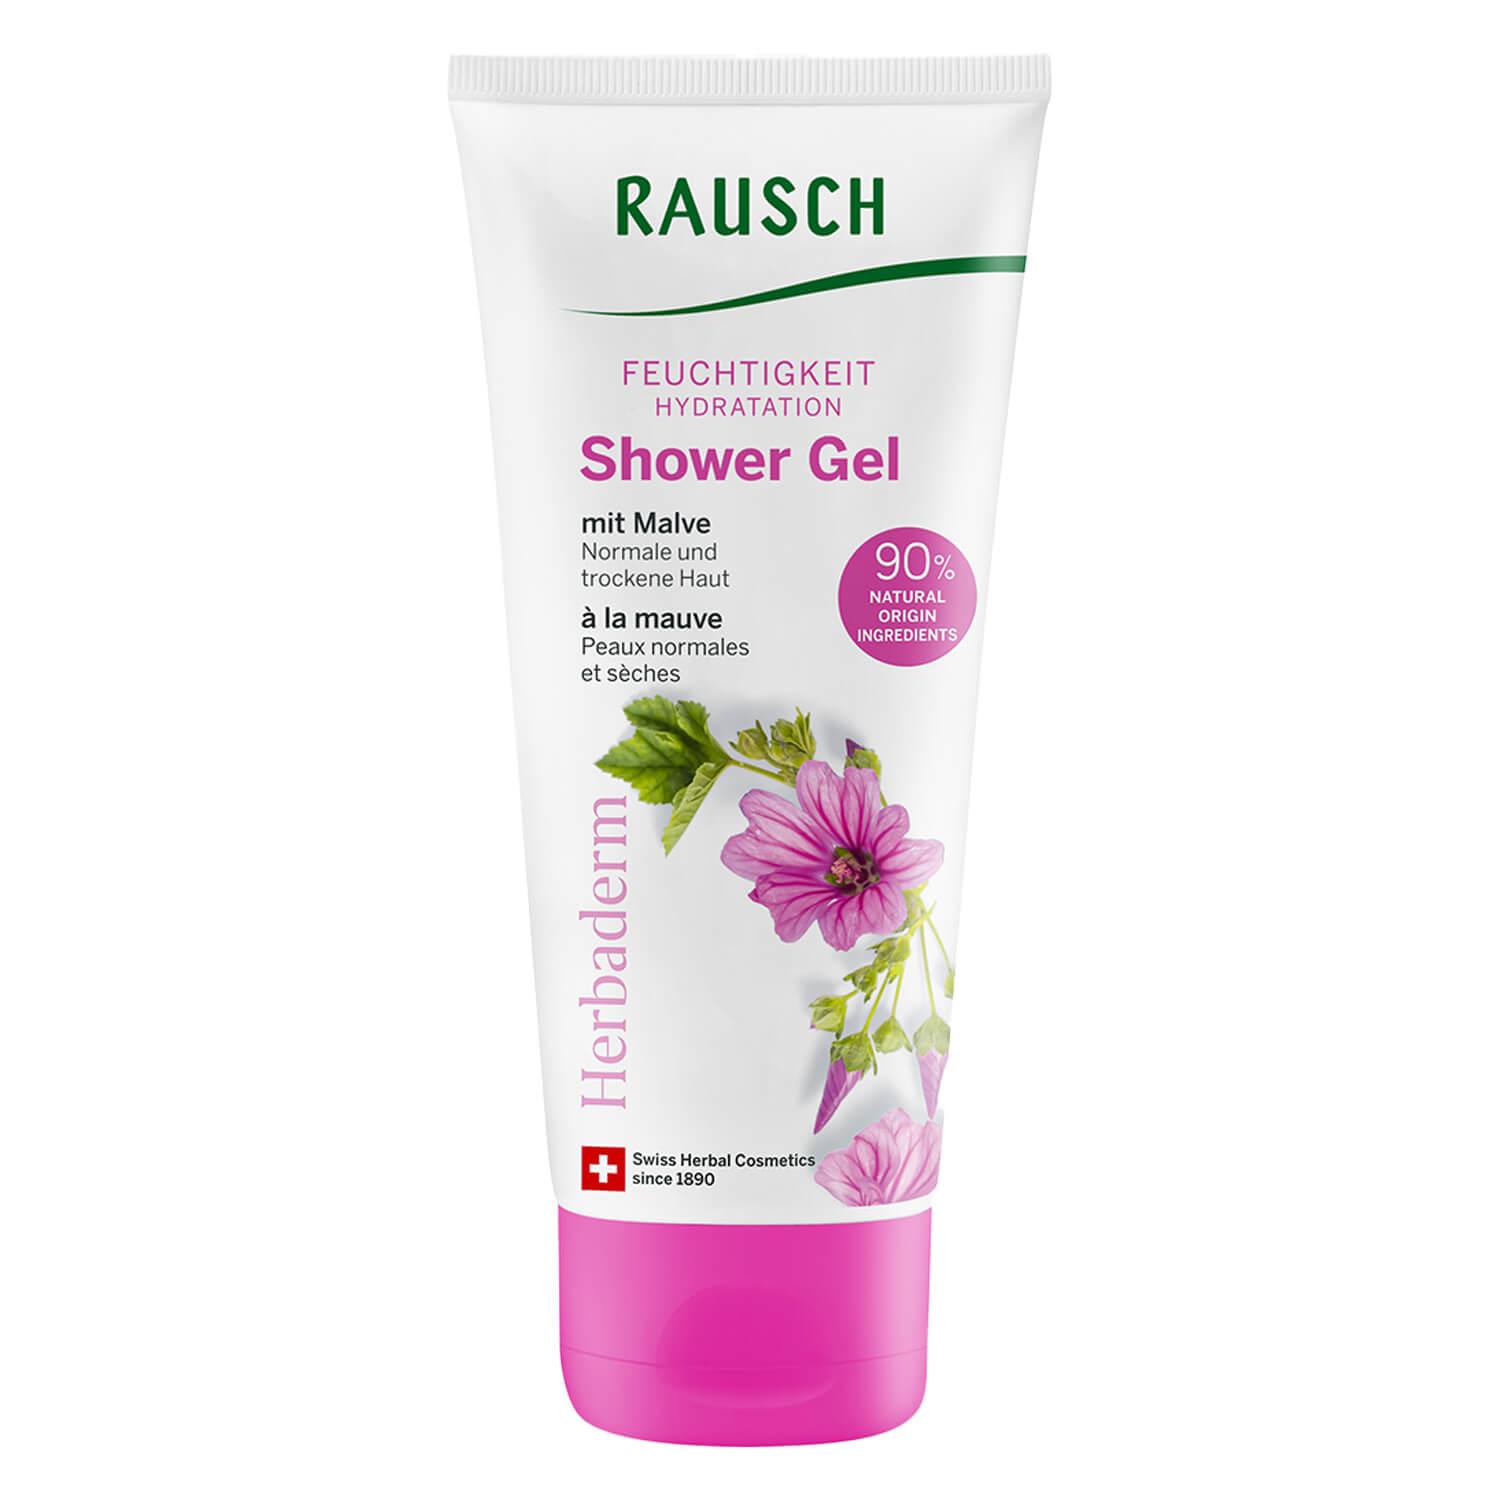 RAUSCH Body - Hydration Shower Gel with mallow